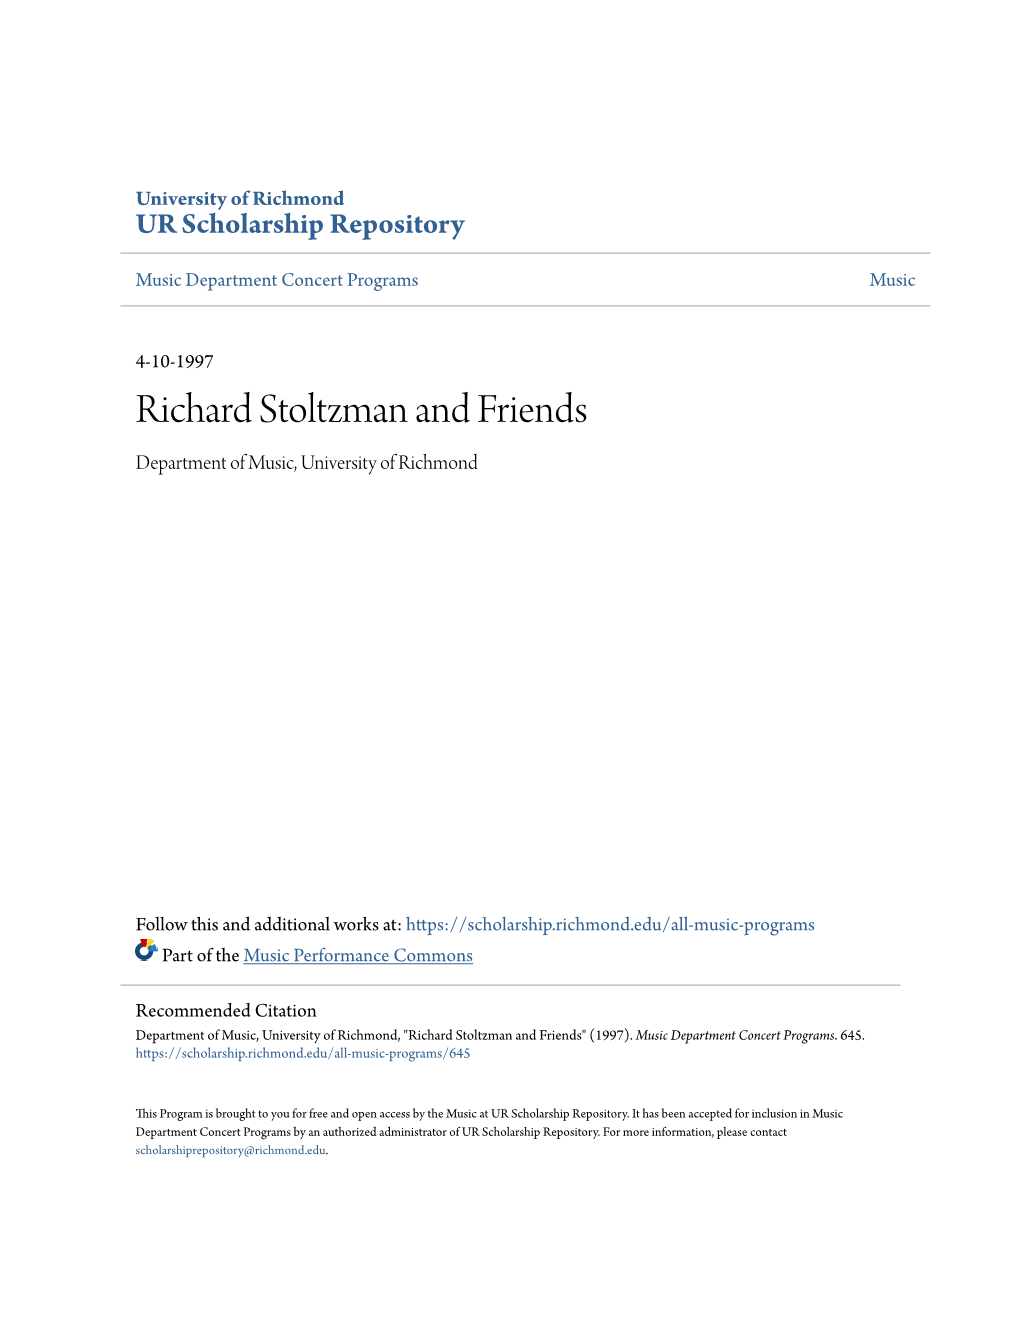 Richard Stoltzman and Friends Department of Music, University of Richmond